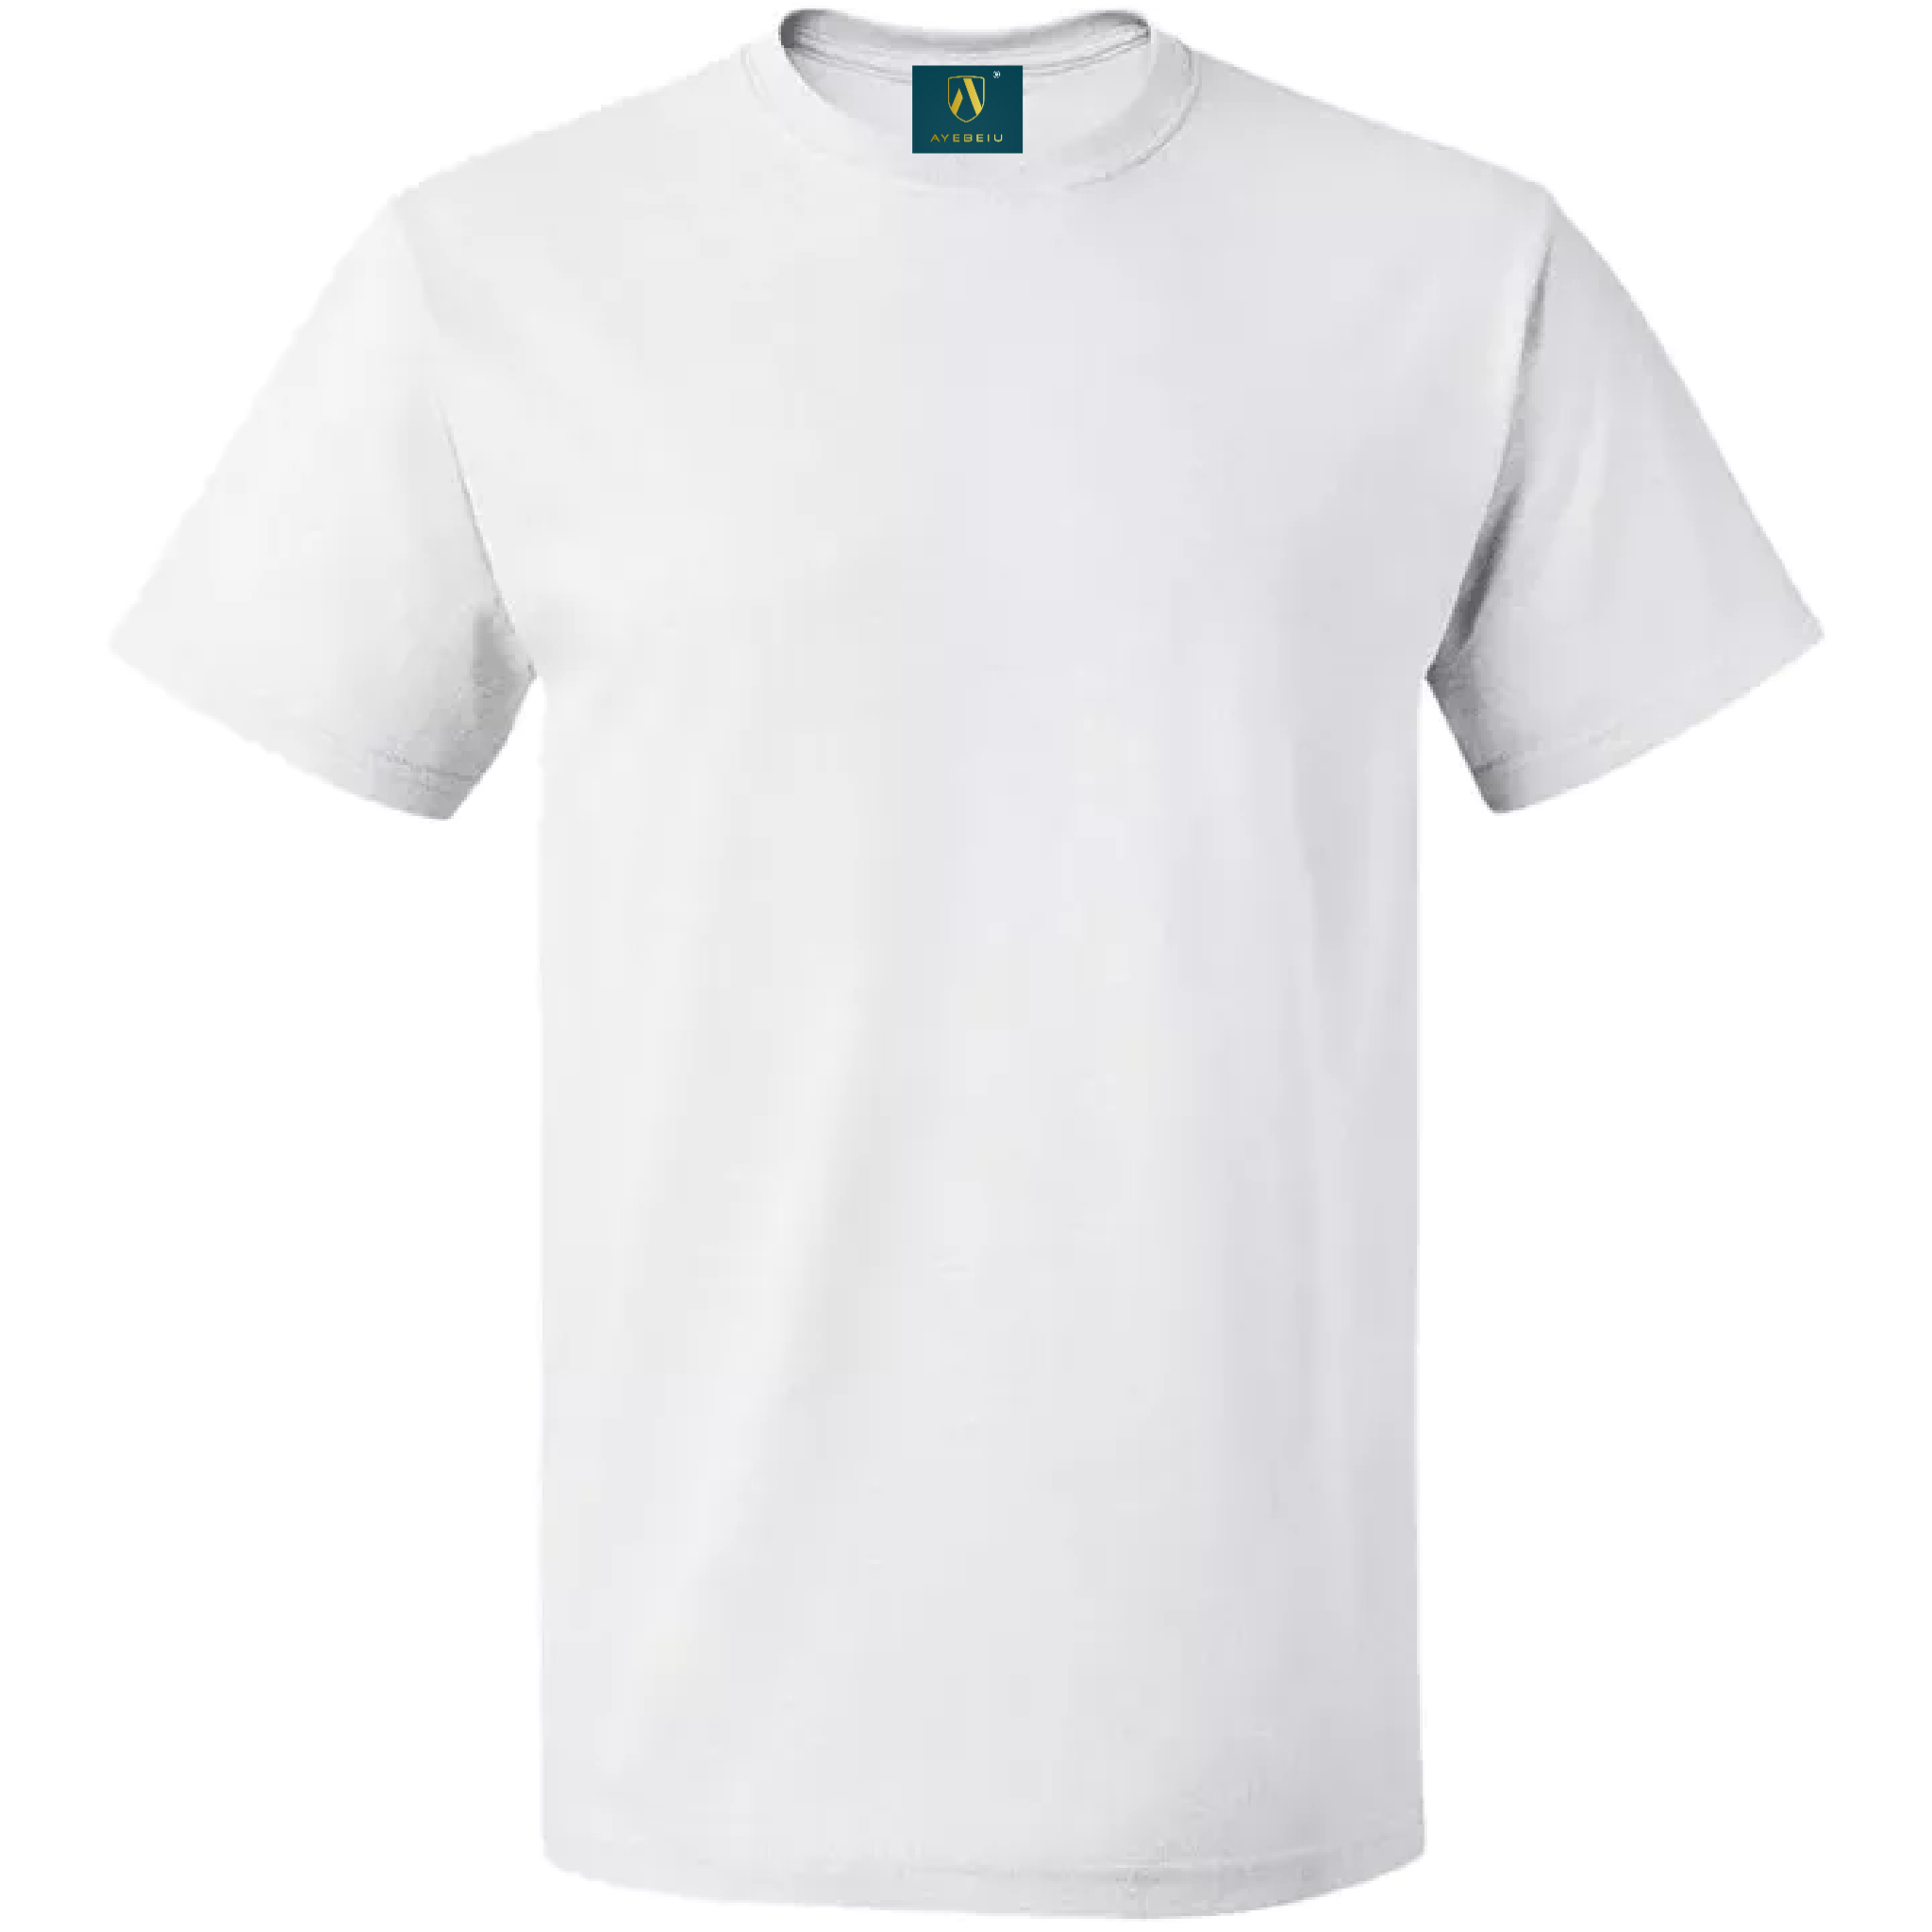 Ayebeiu White T-Shirt – AYEBEIU